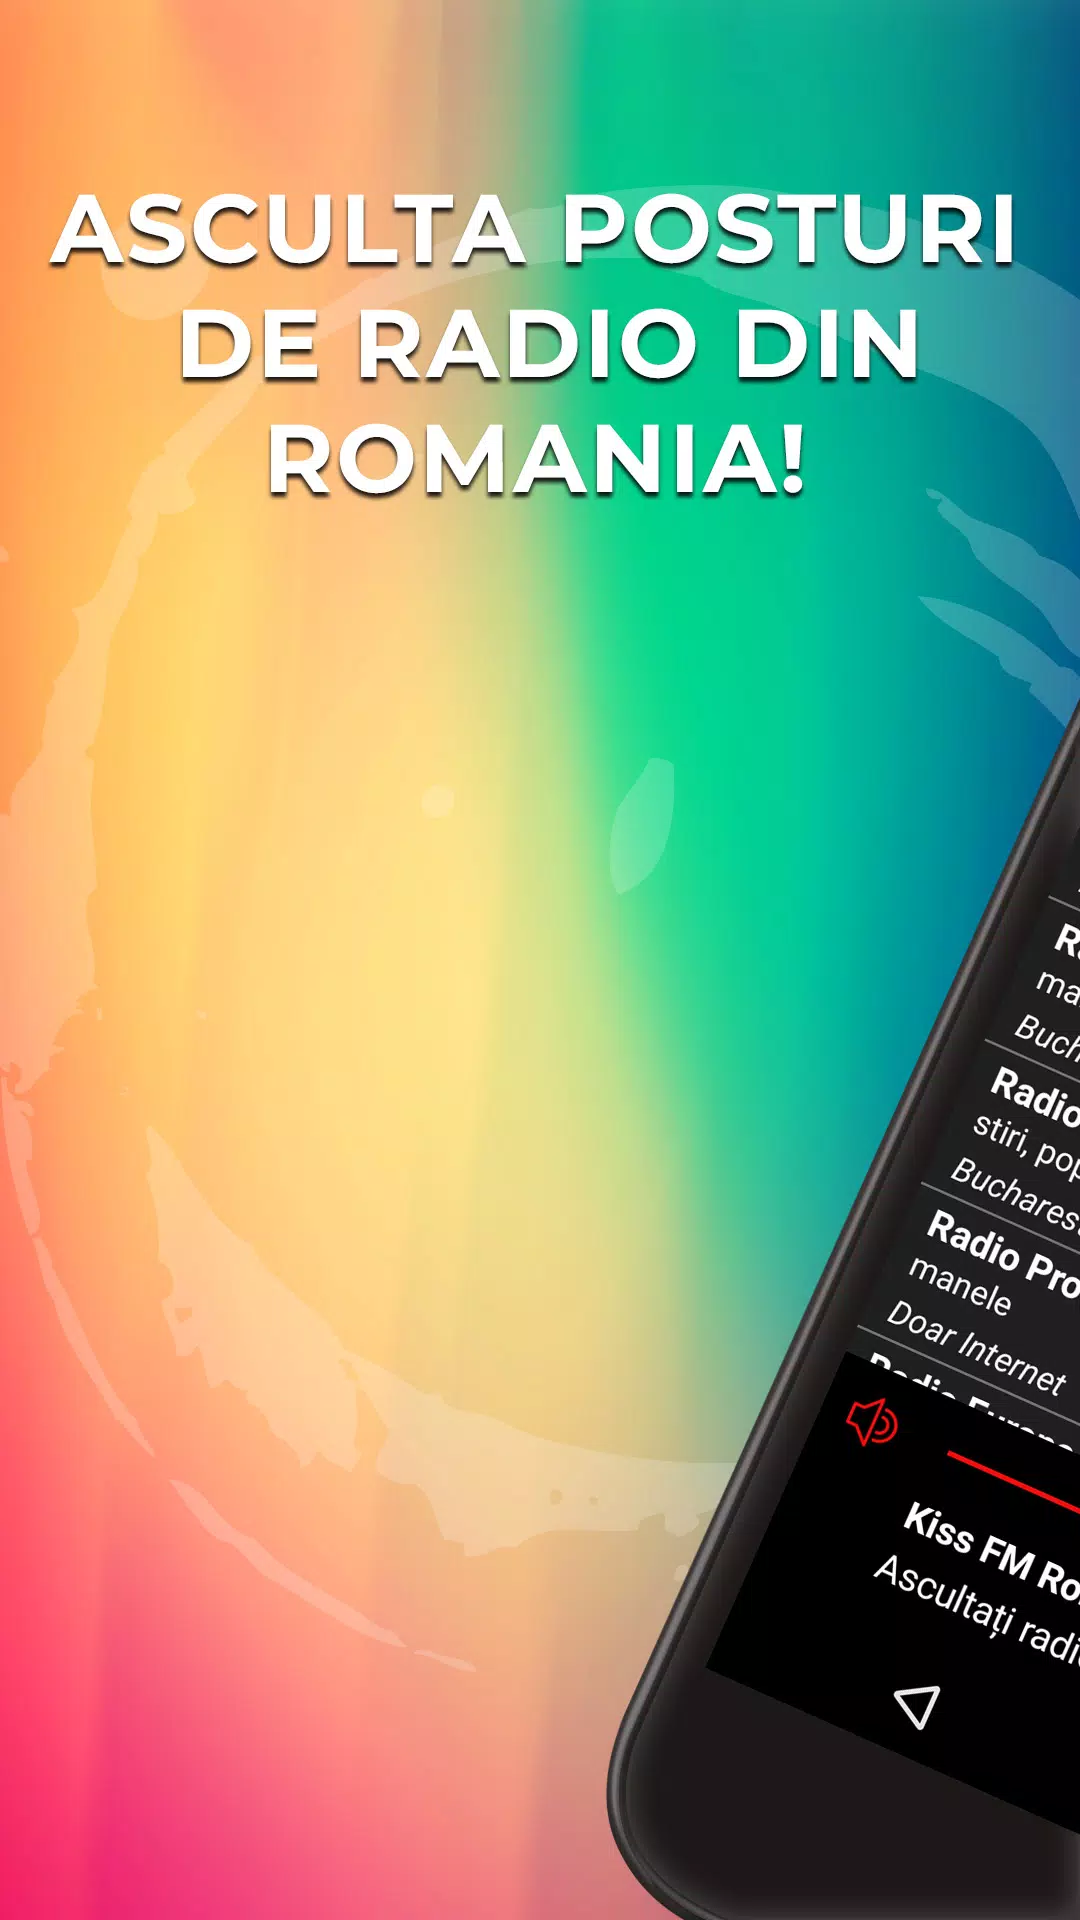 Radio online România: Listen to live FM radio for Android - APK Download